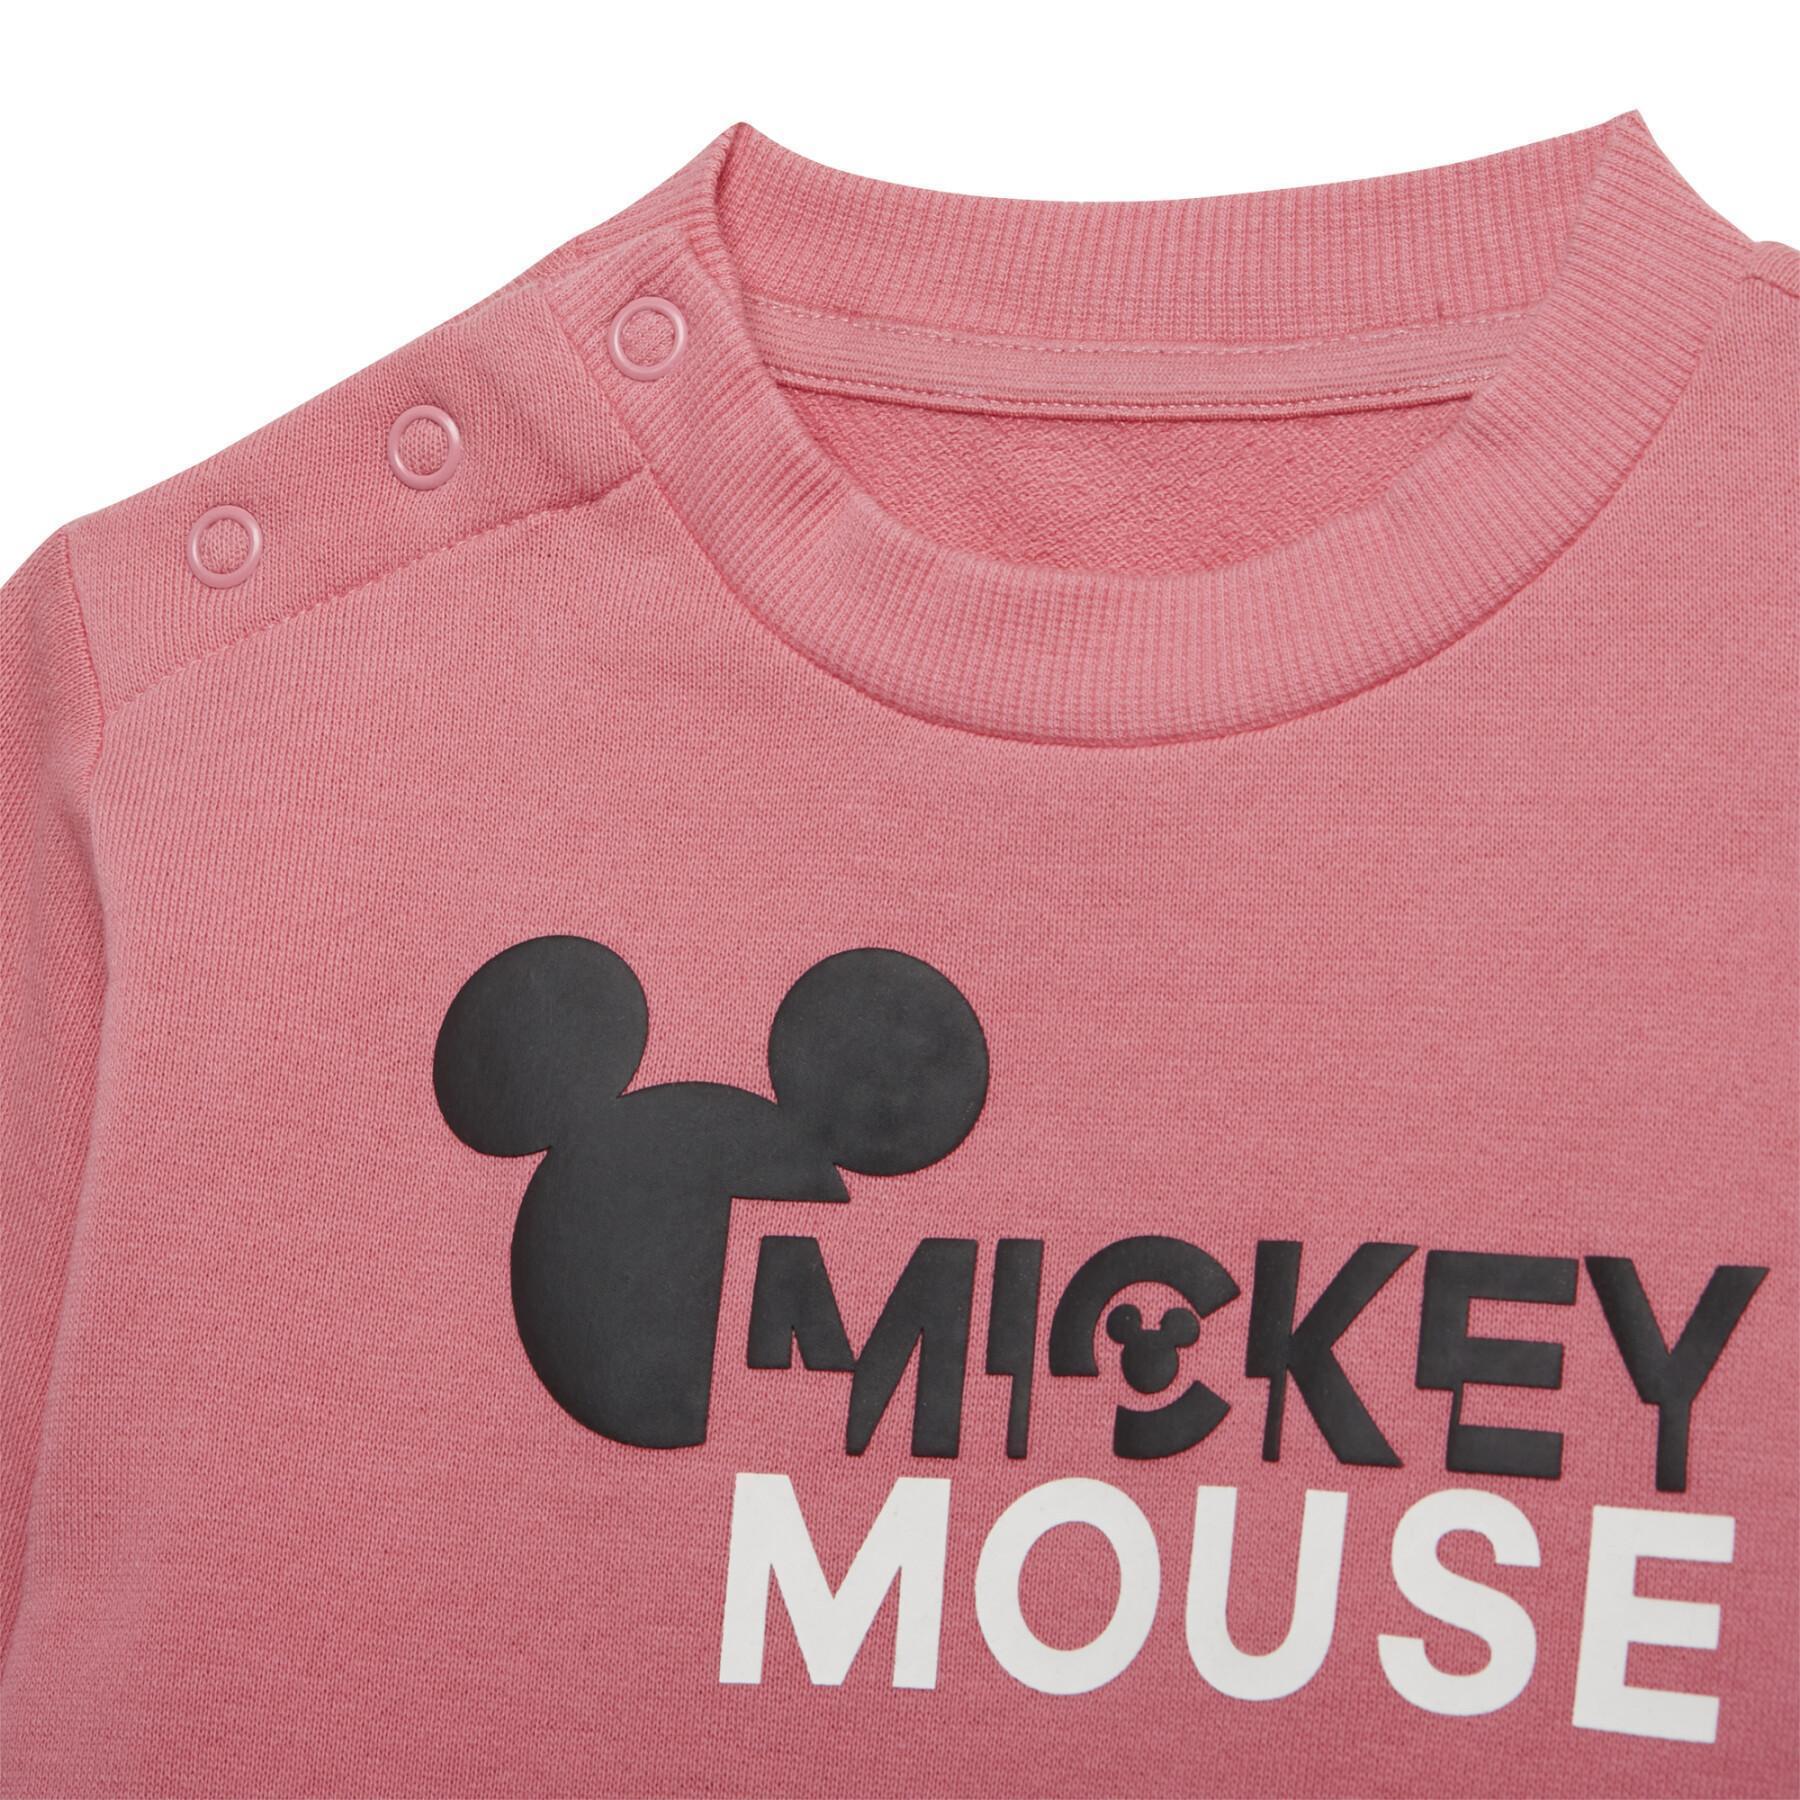 Baby jogging adidas x disney mickey mouse